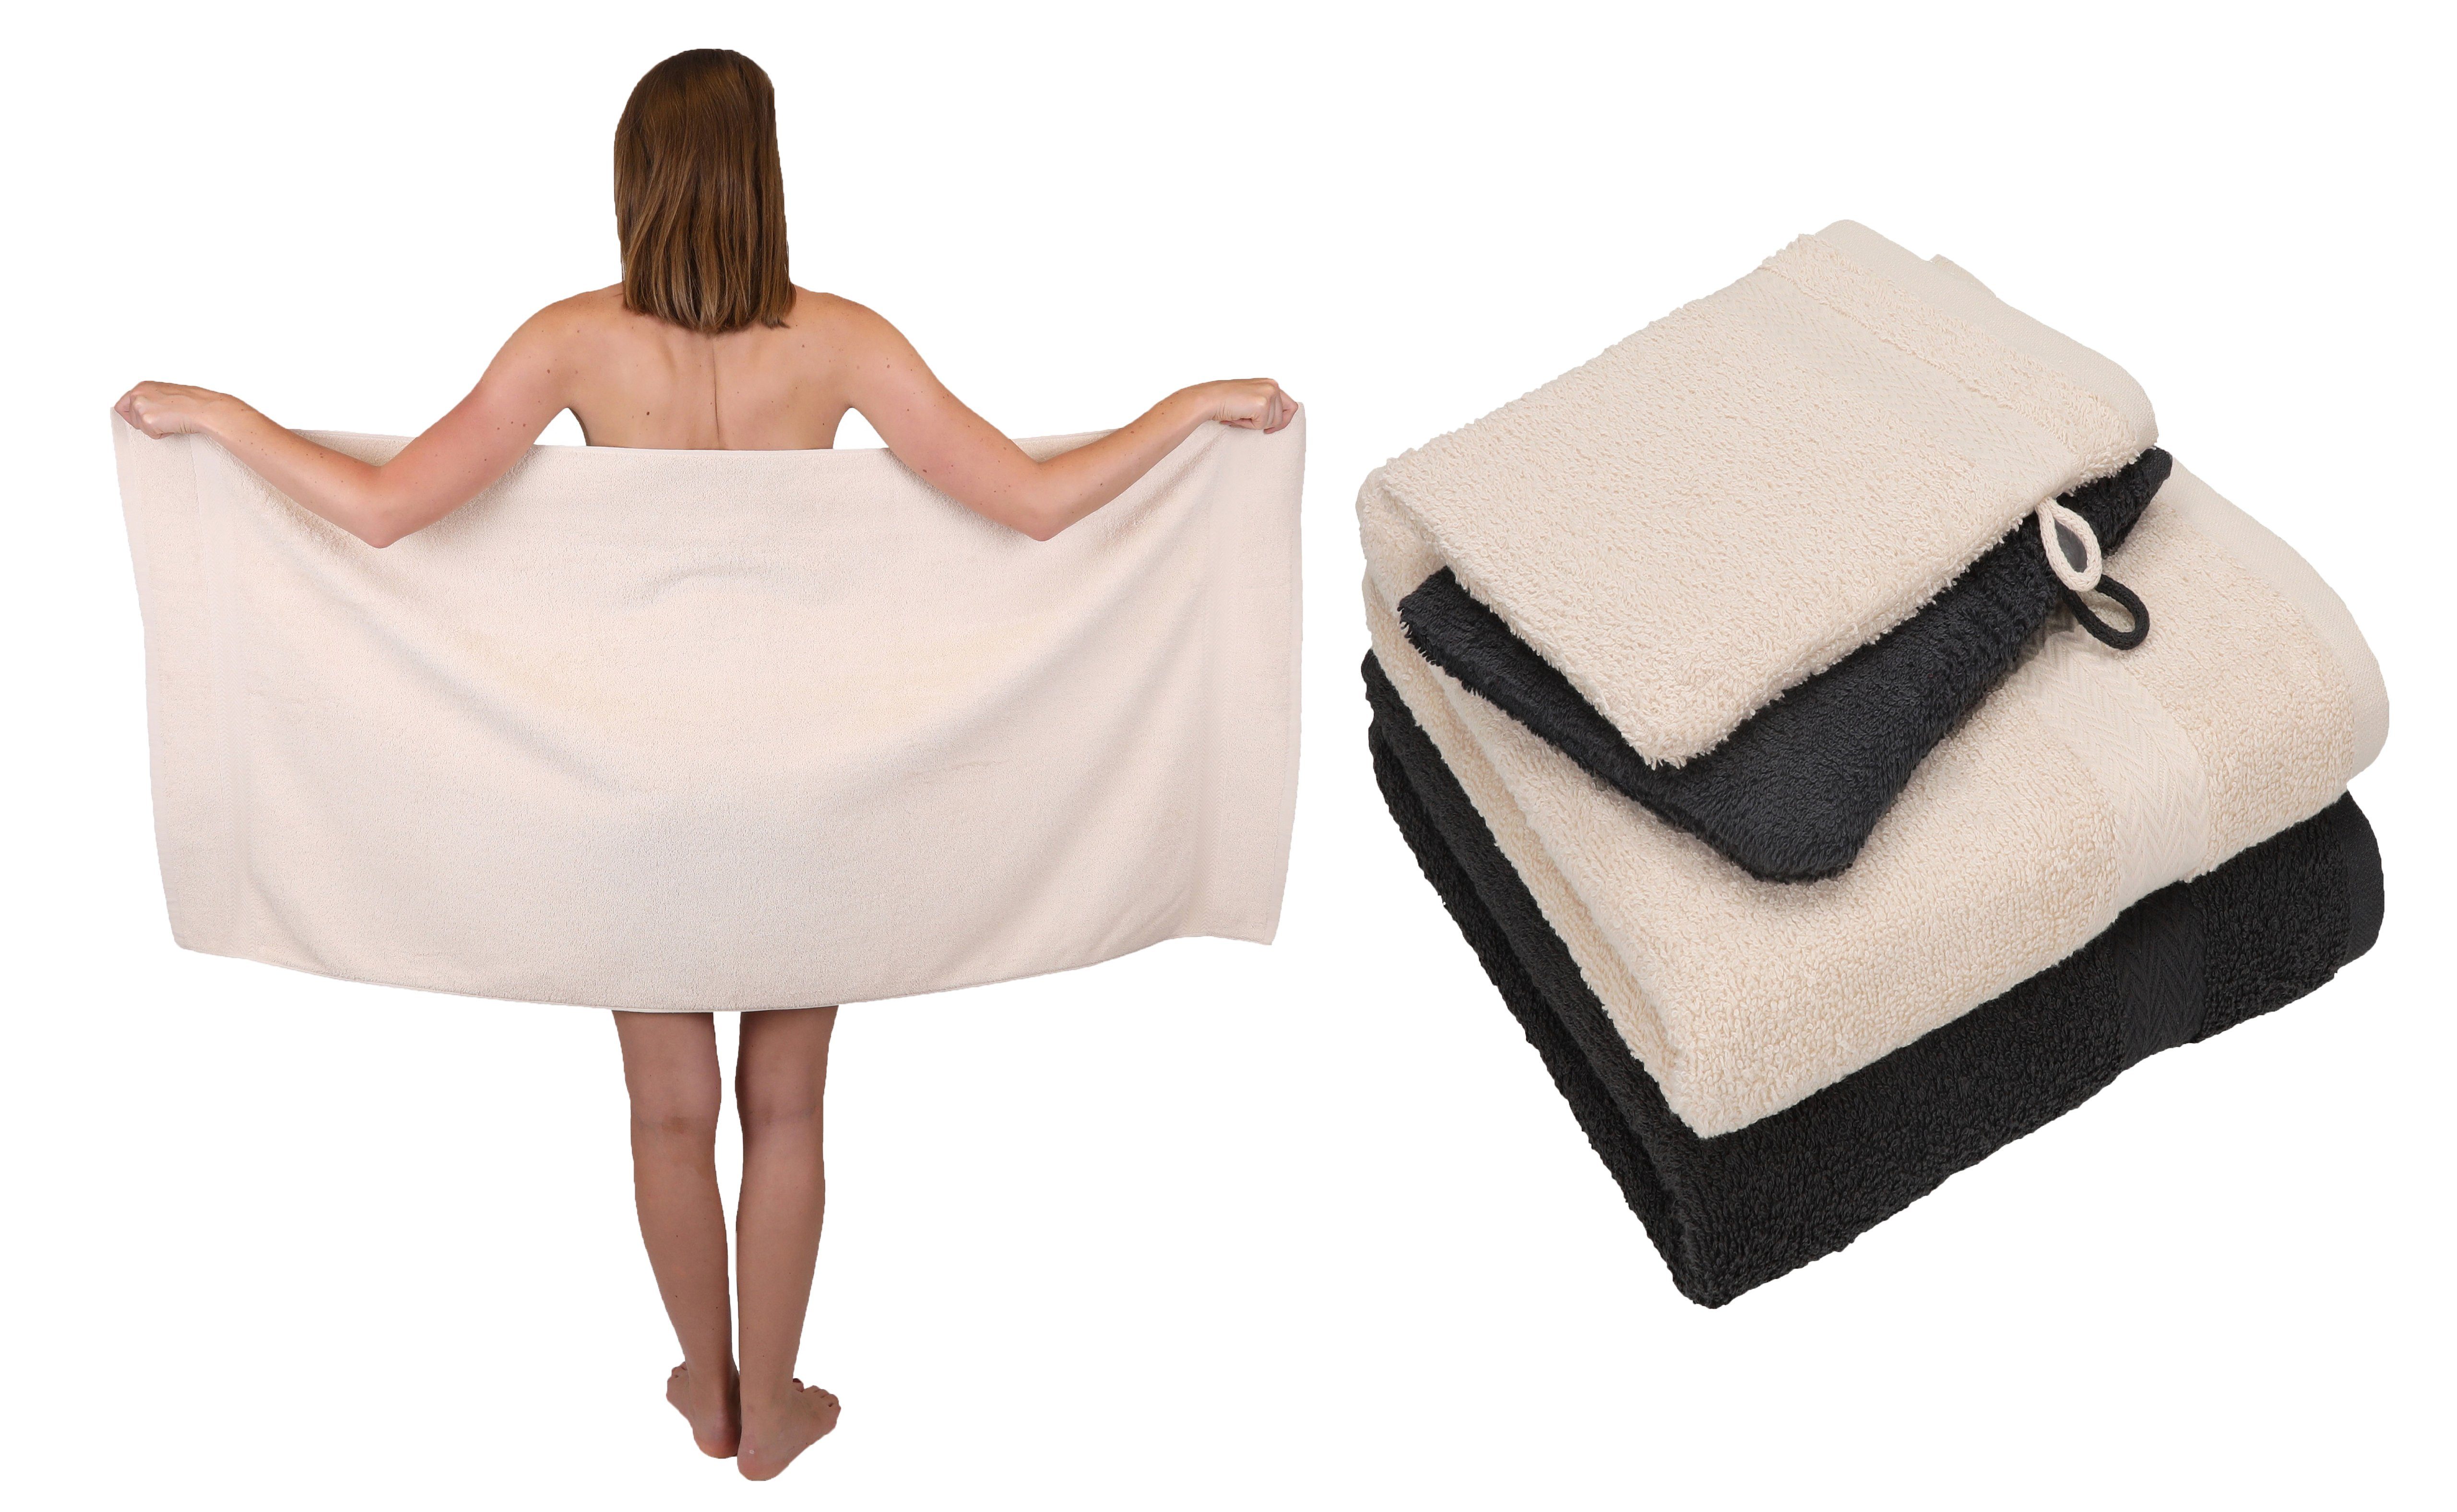 Betz Handtuch Set 5 TLG. Handtuch Set Single Pack 100% Baumwolle 1 Duschtuch 2 Handtücher 2 Waschhandschuhe, 100% Baumwolle sand-graphit grau